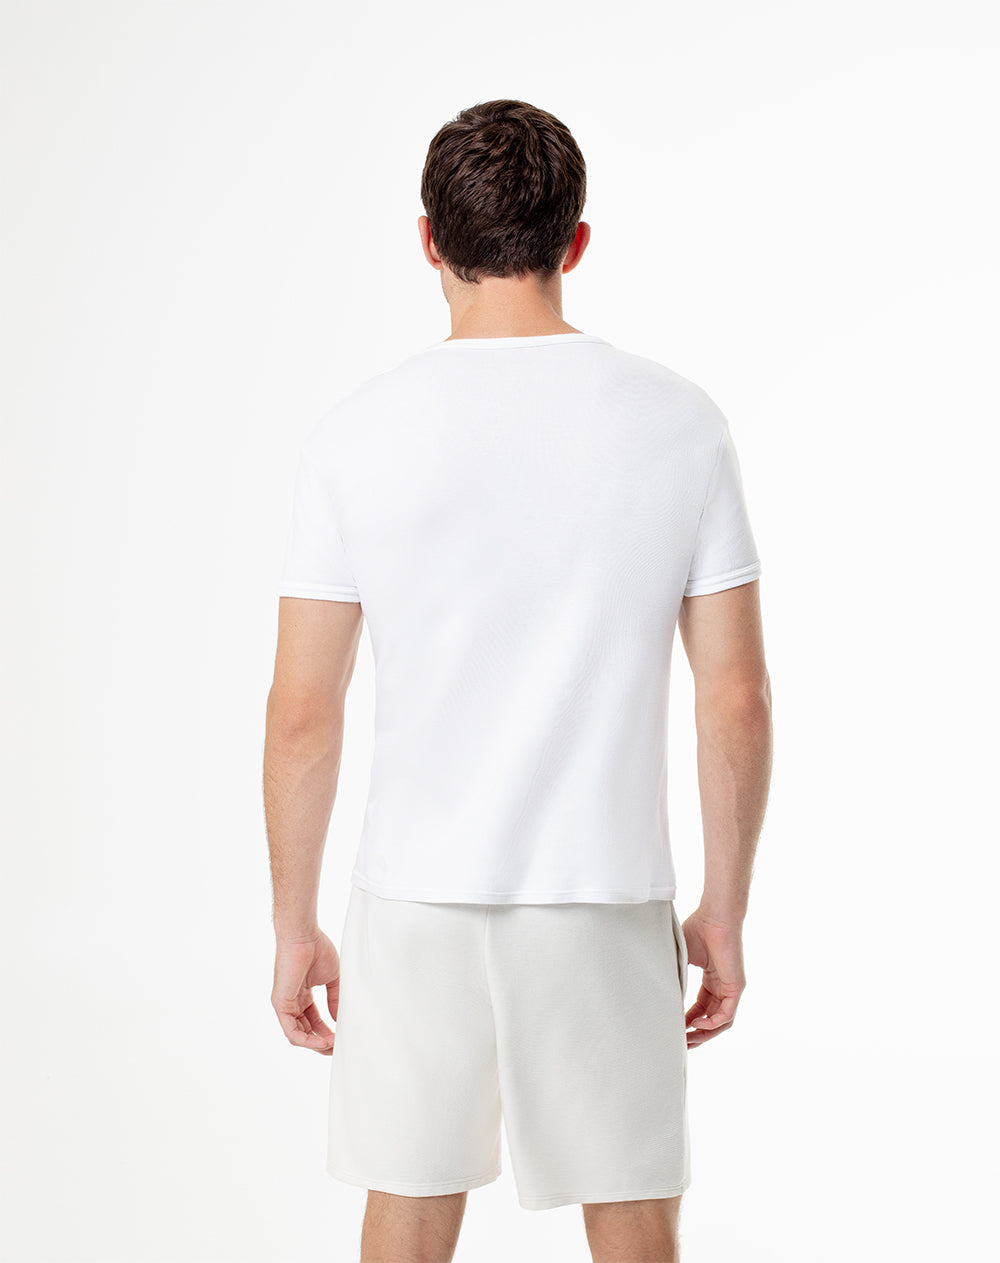 3 camisetas slim fit manga corta blanca